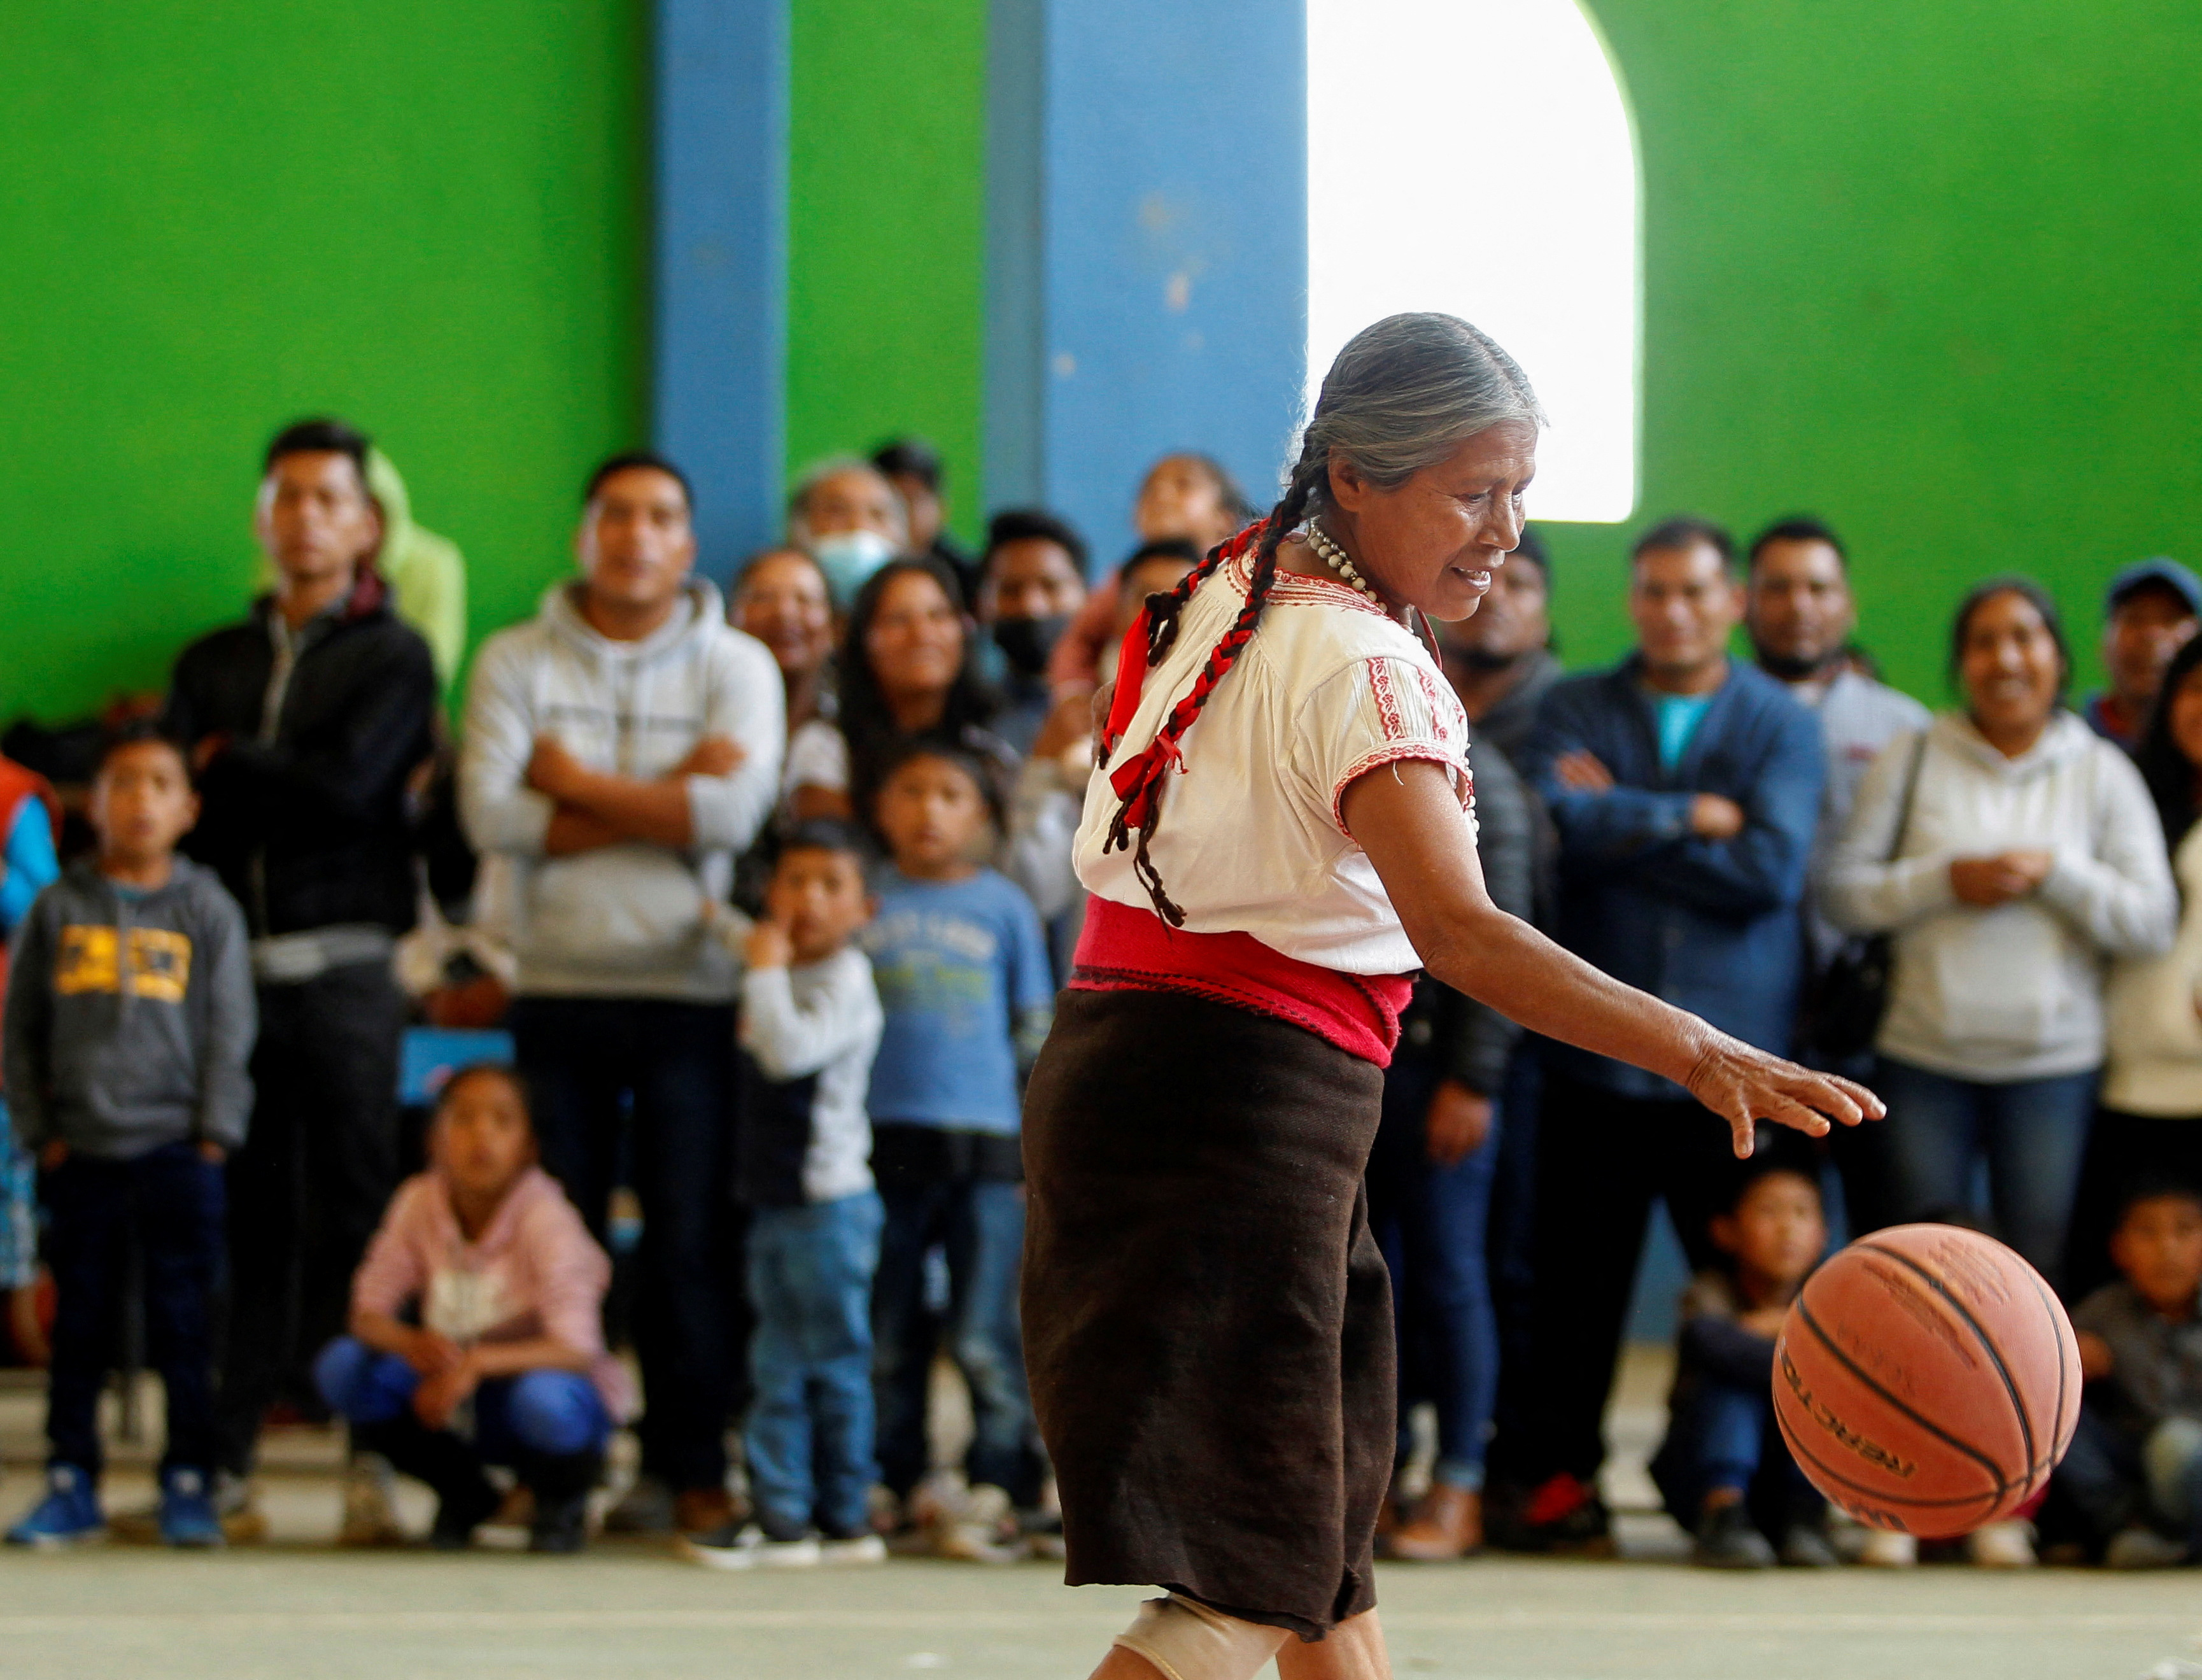 Mexico's 'Granny Jordan' becomes viral TikTok basketball star